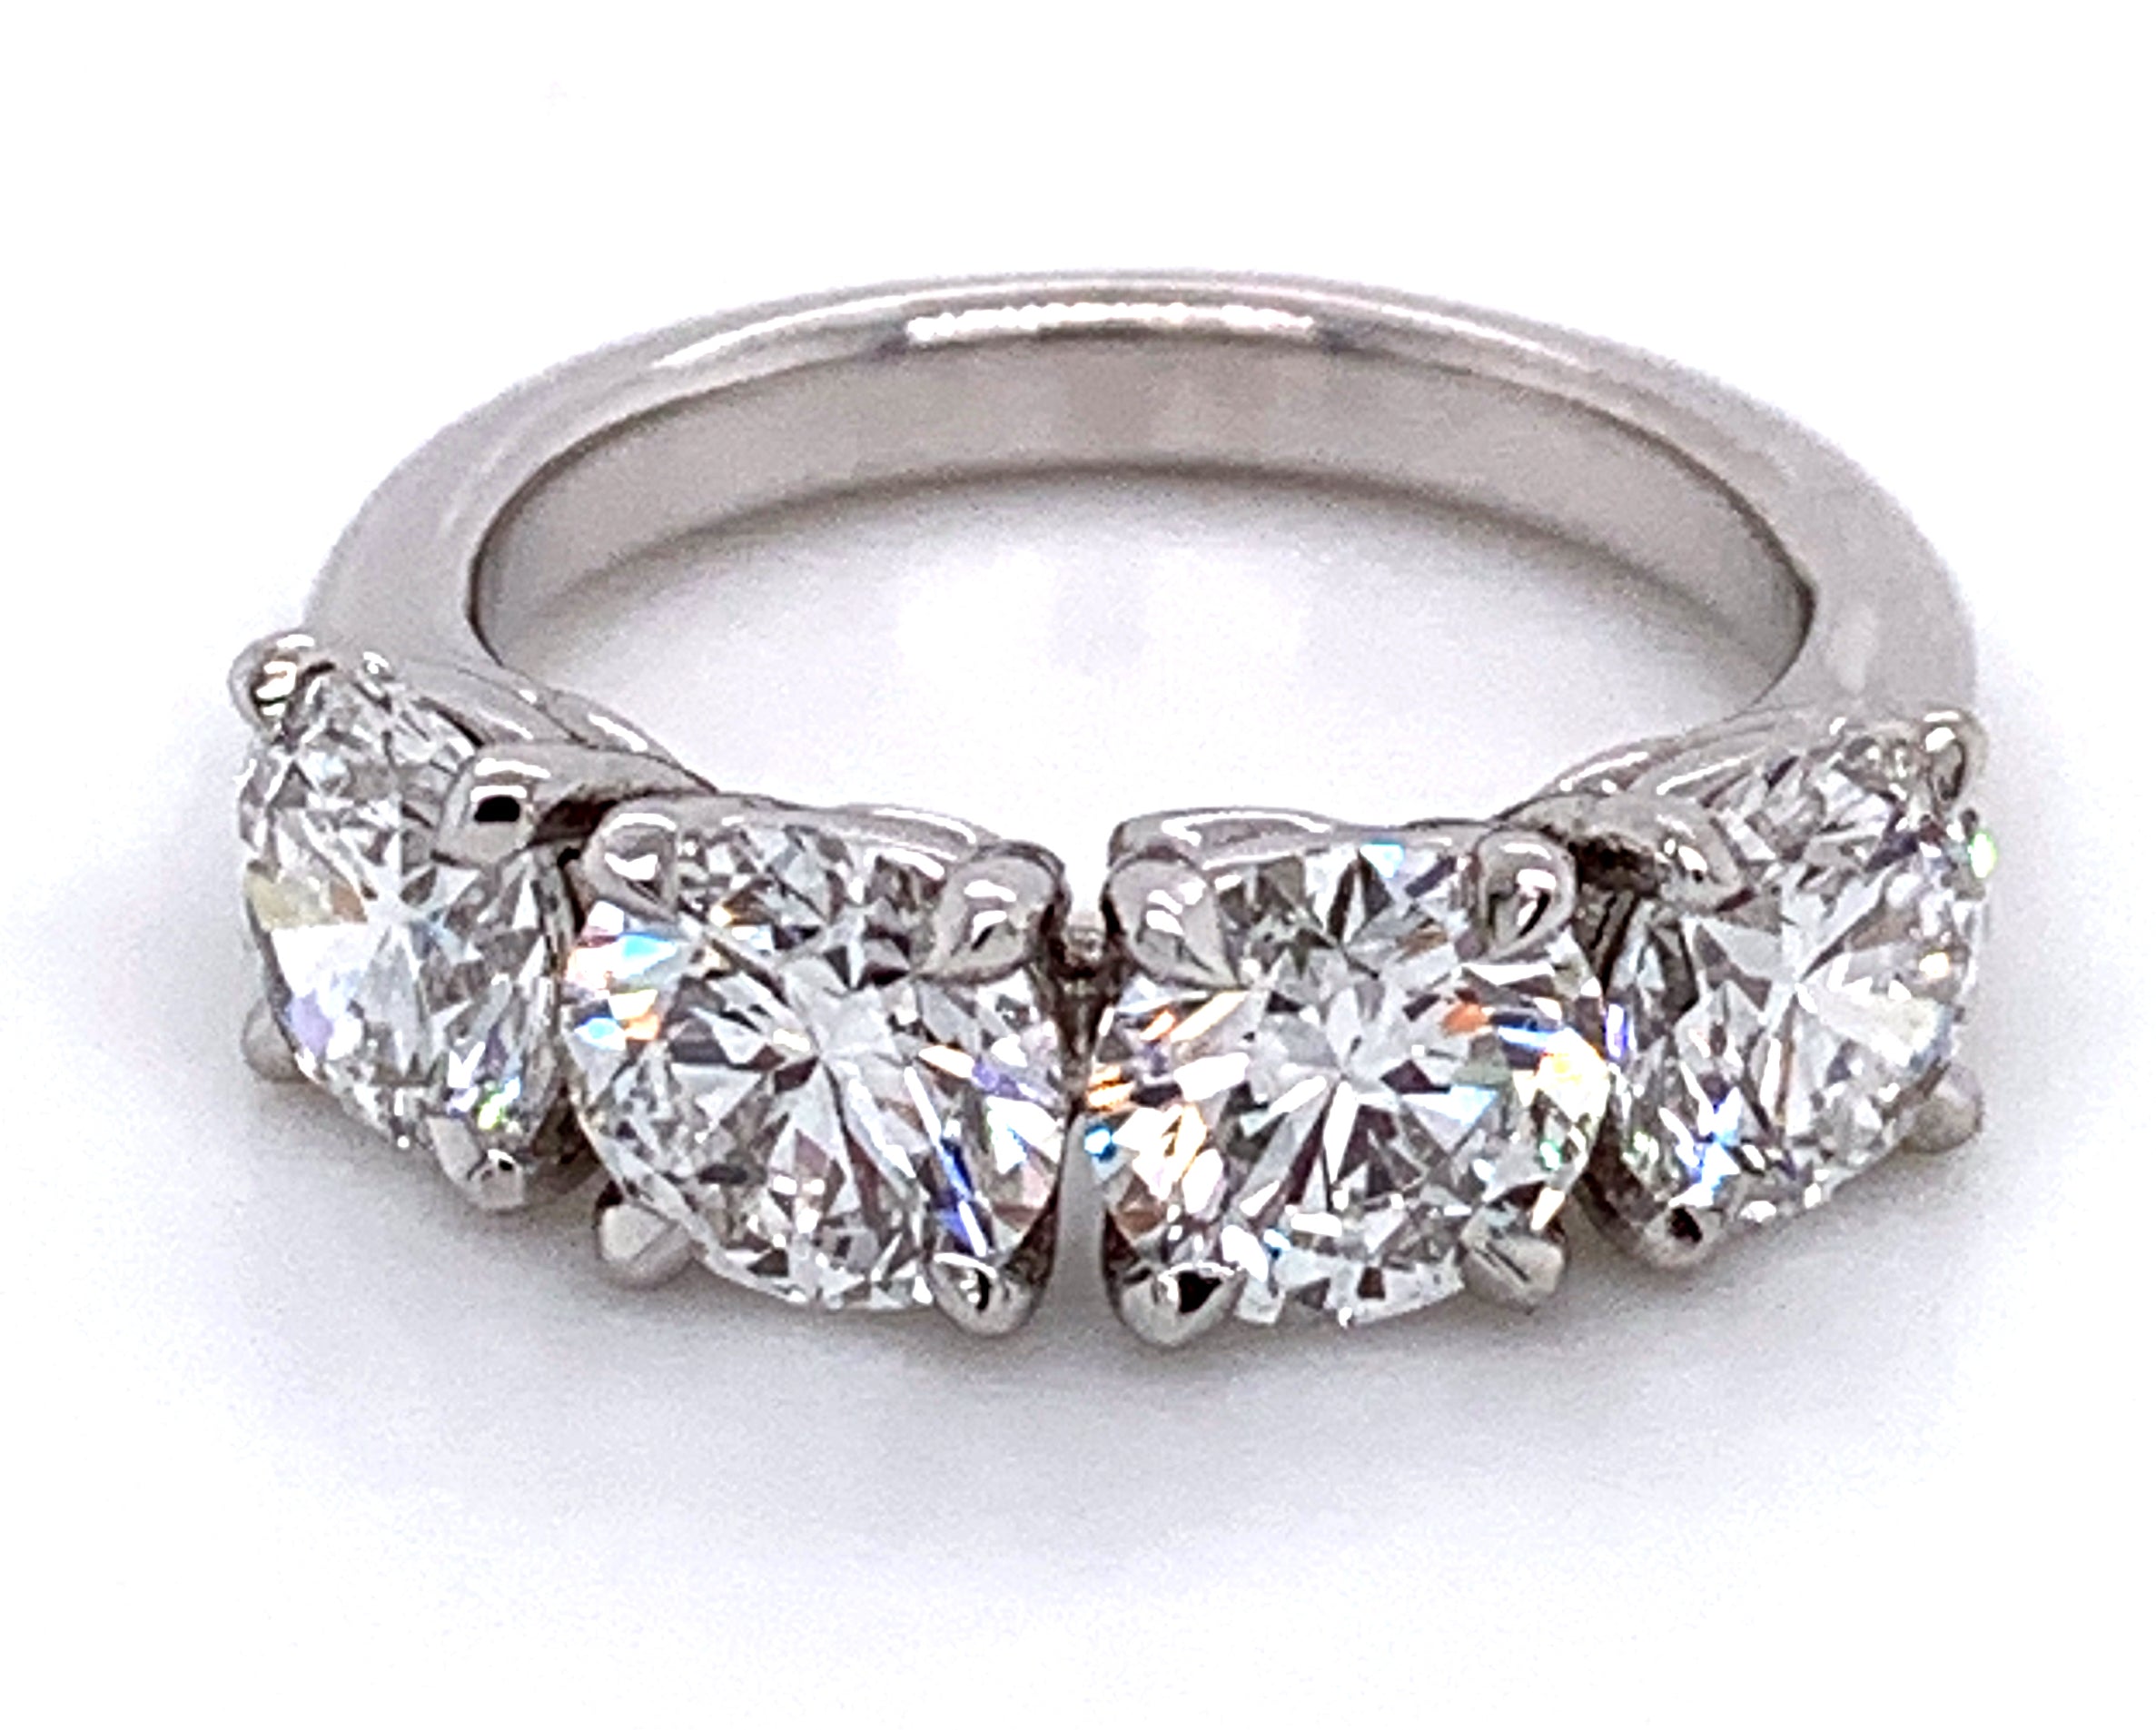 2.82CT T.W. Four Stone GIA Certified Diamond Platinum Ring - HANIKEN JEWELERS NEW-YORK